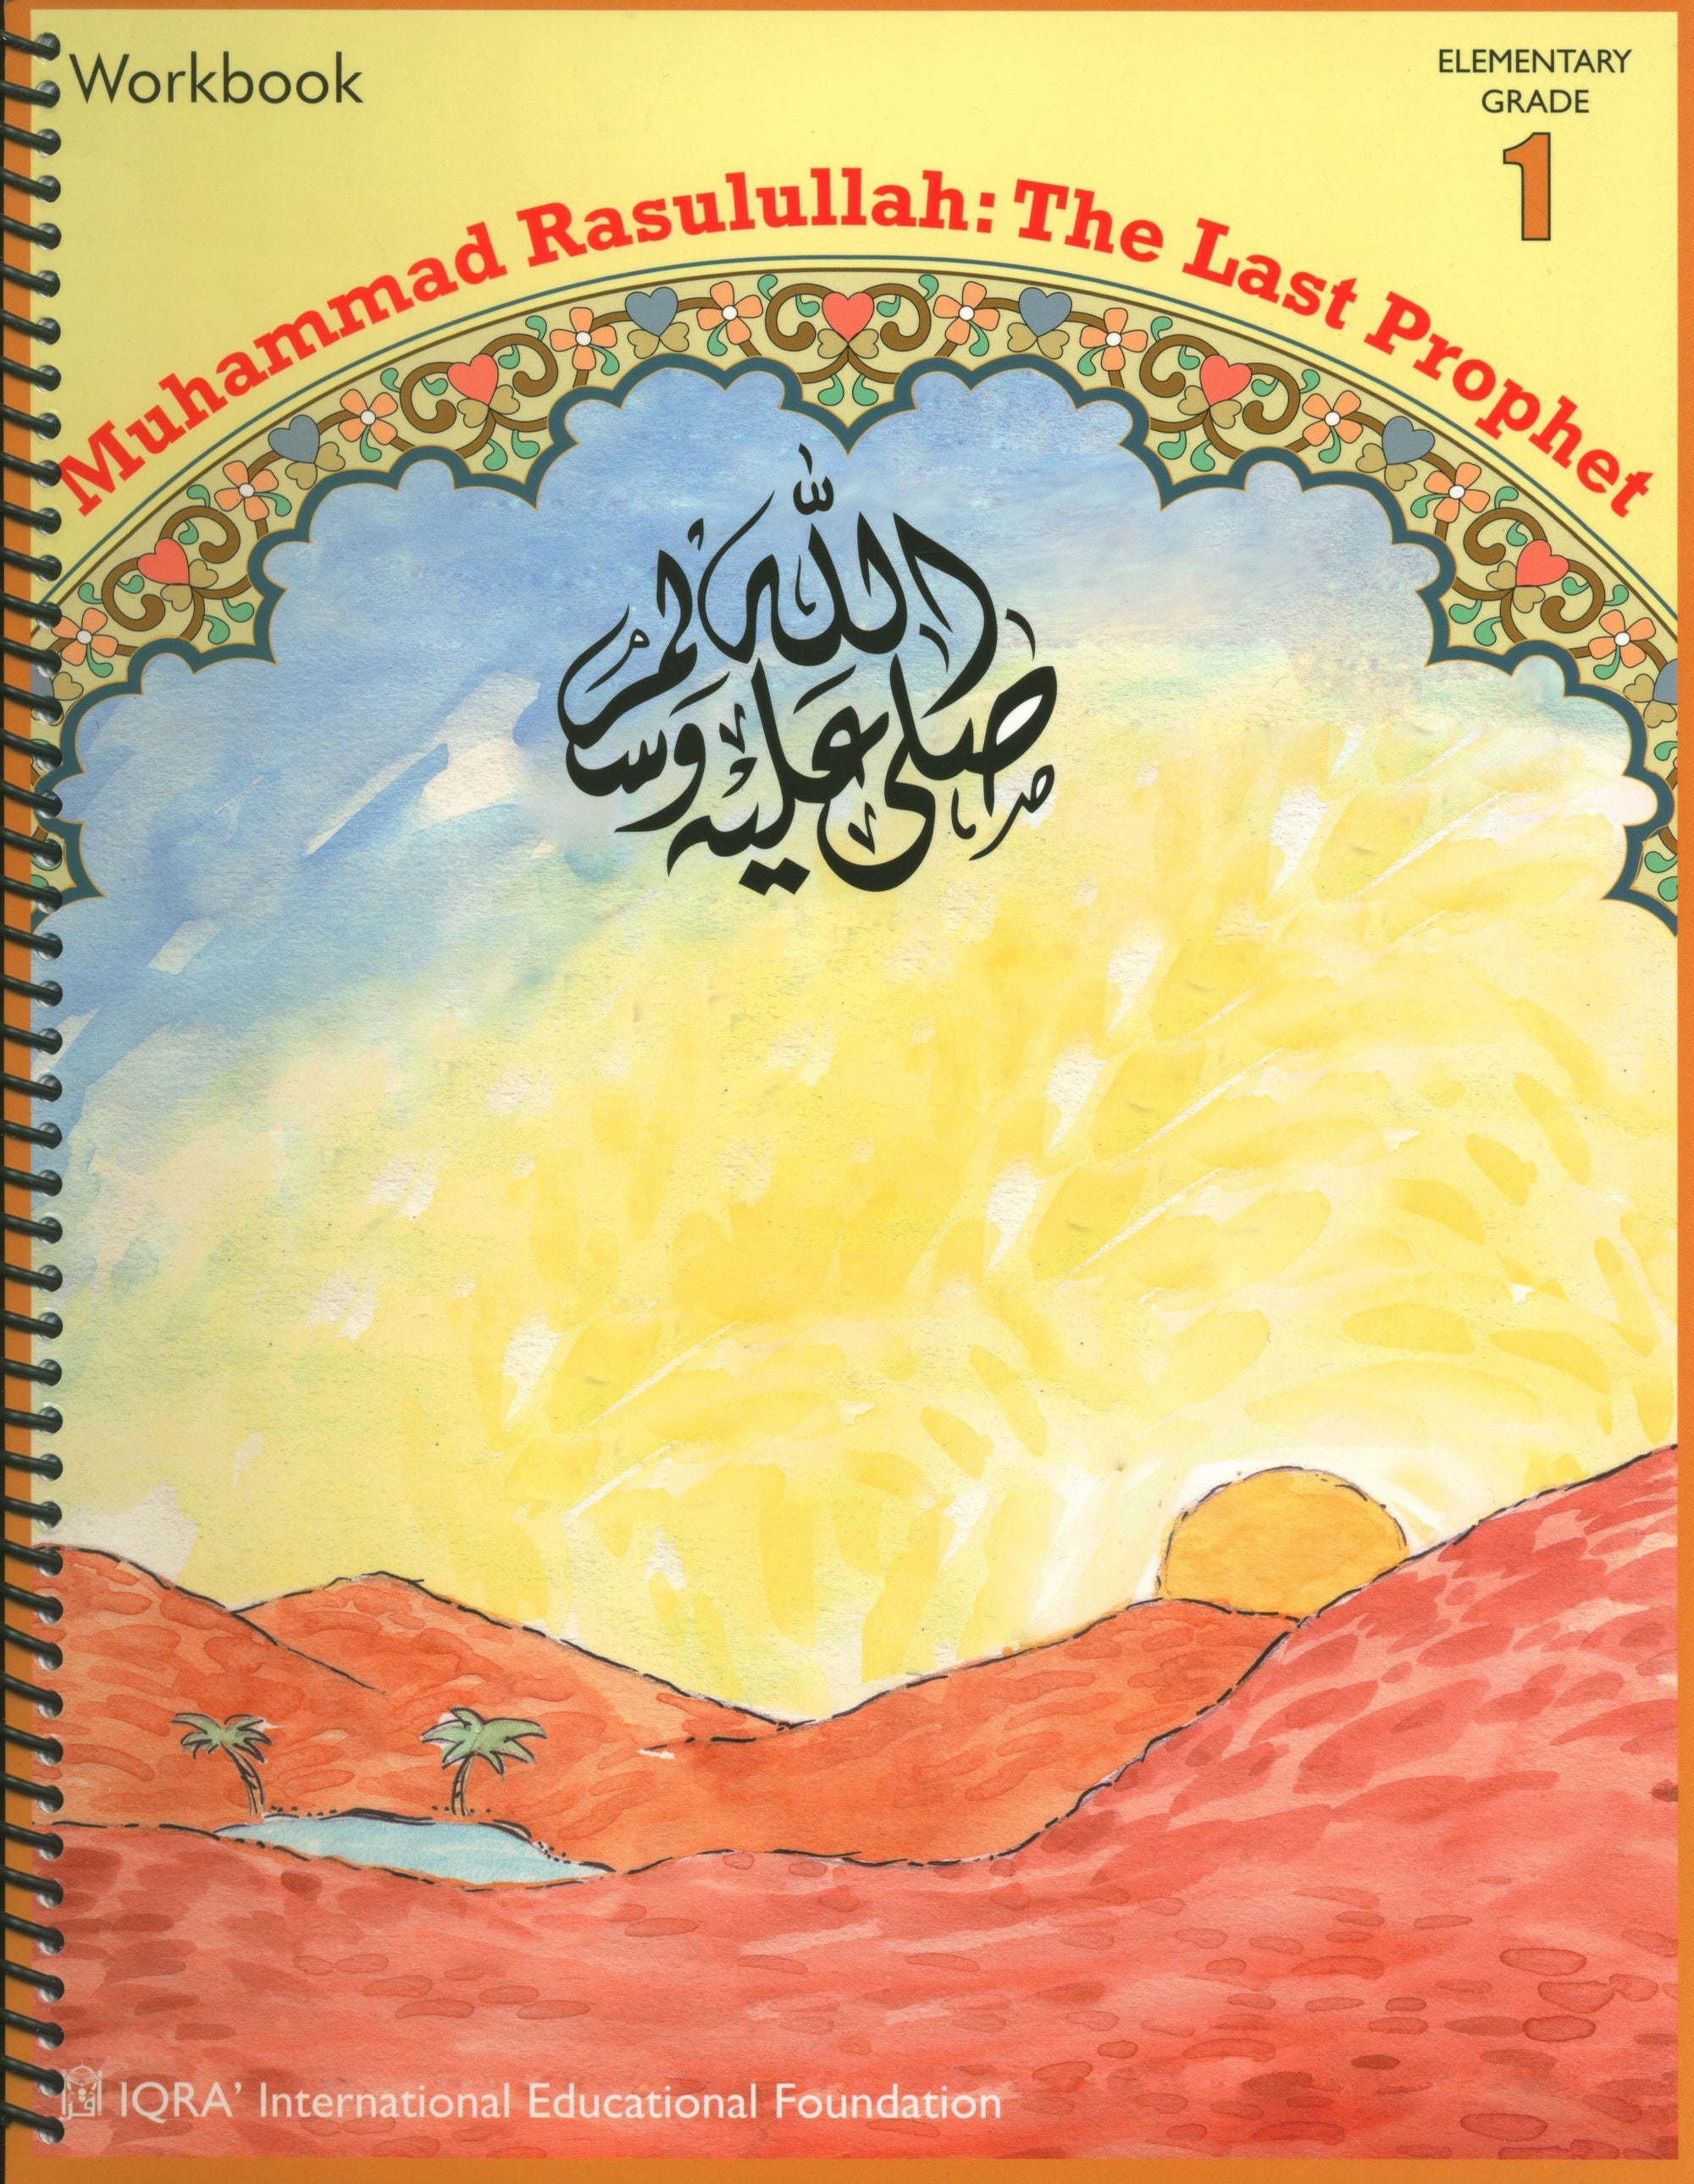 Muhammad Rasulullah The Last Prophet Workbook - 1st Grade